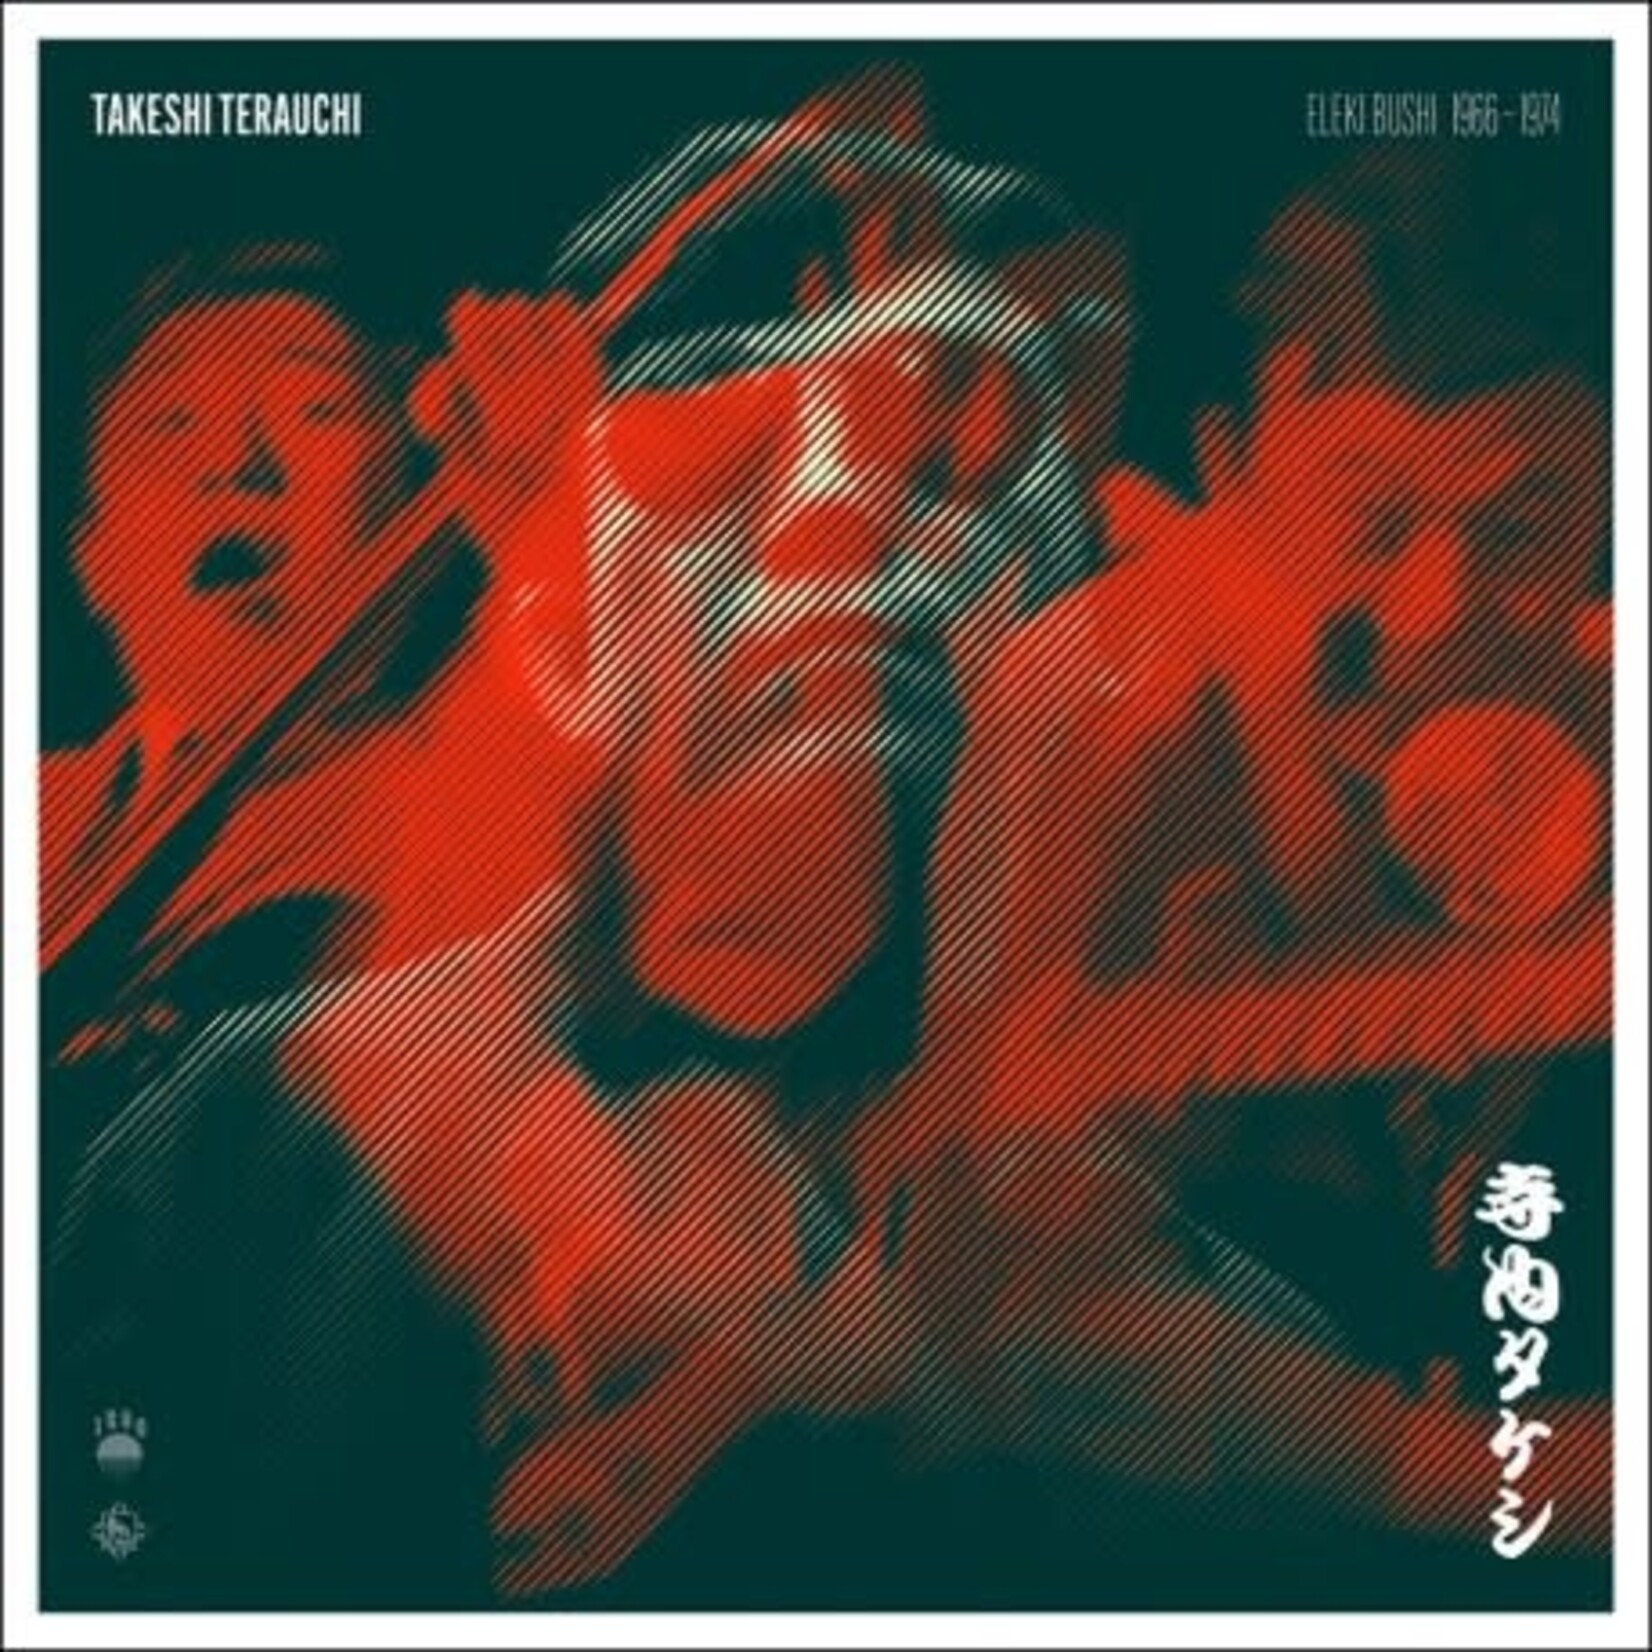 [New] Takeshi Terauchi - Eleki Bushi 1966-1974